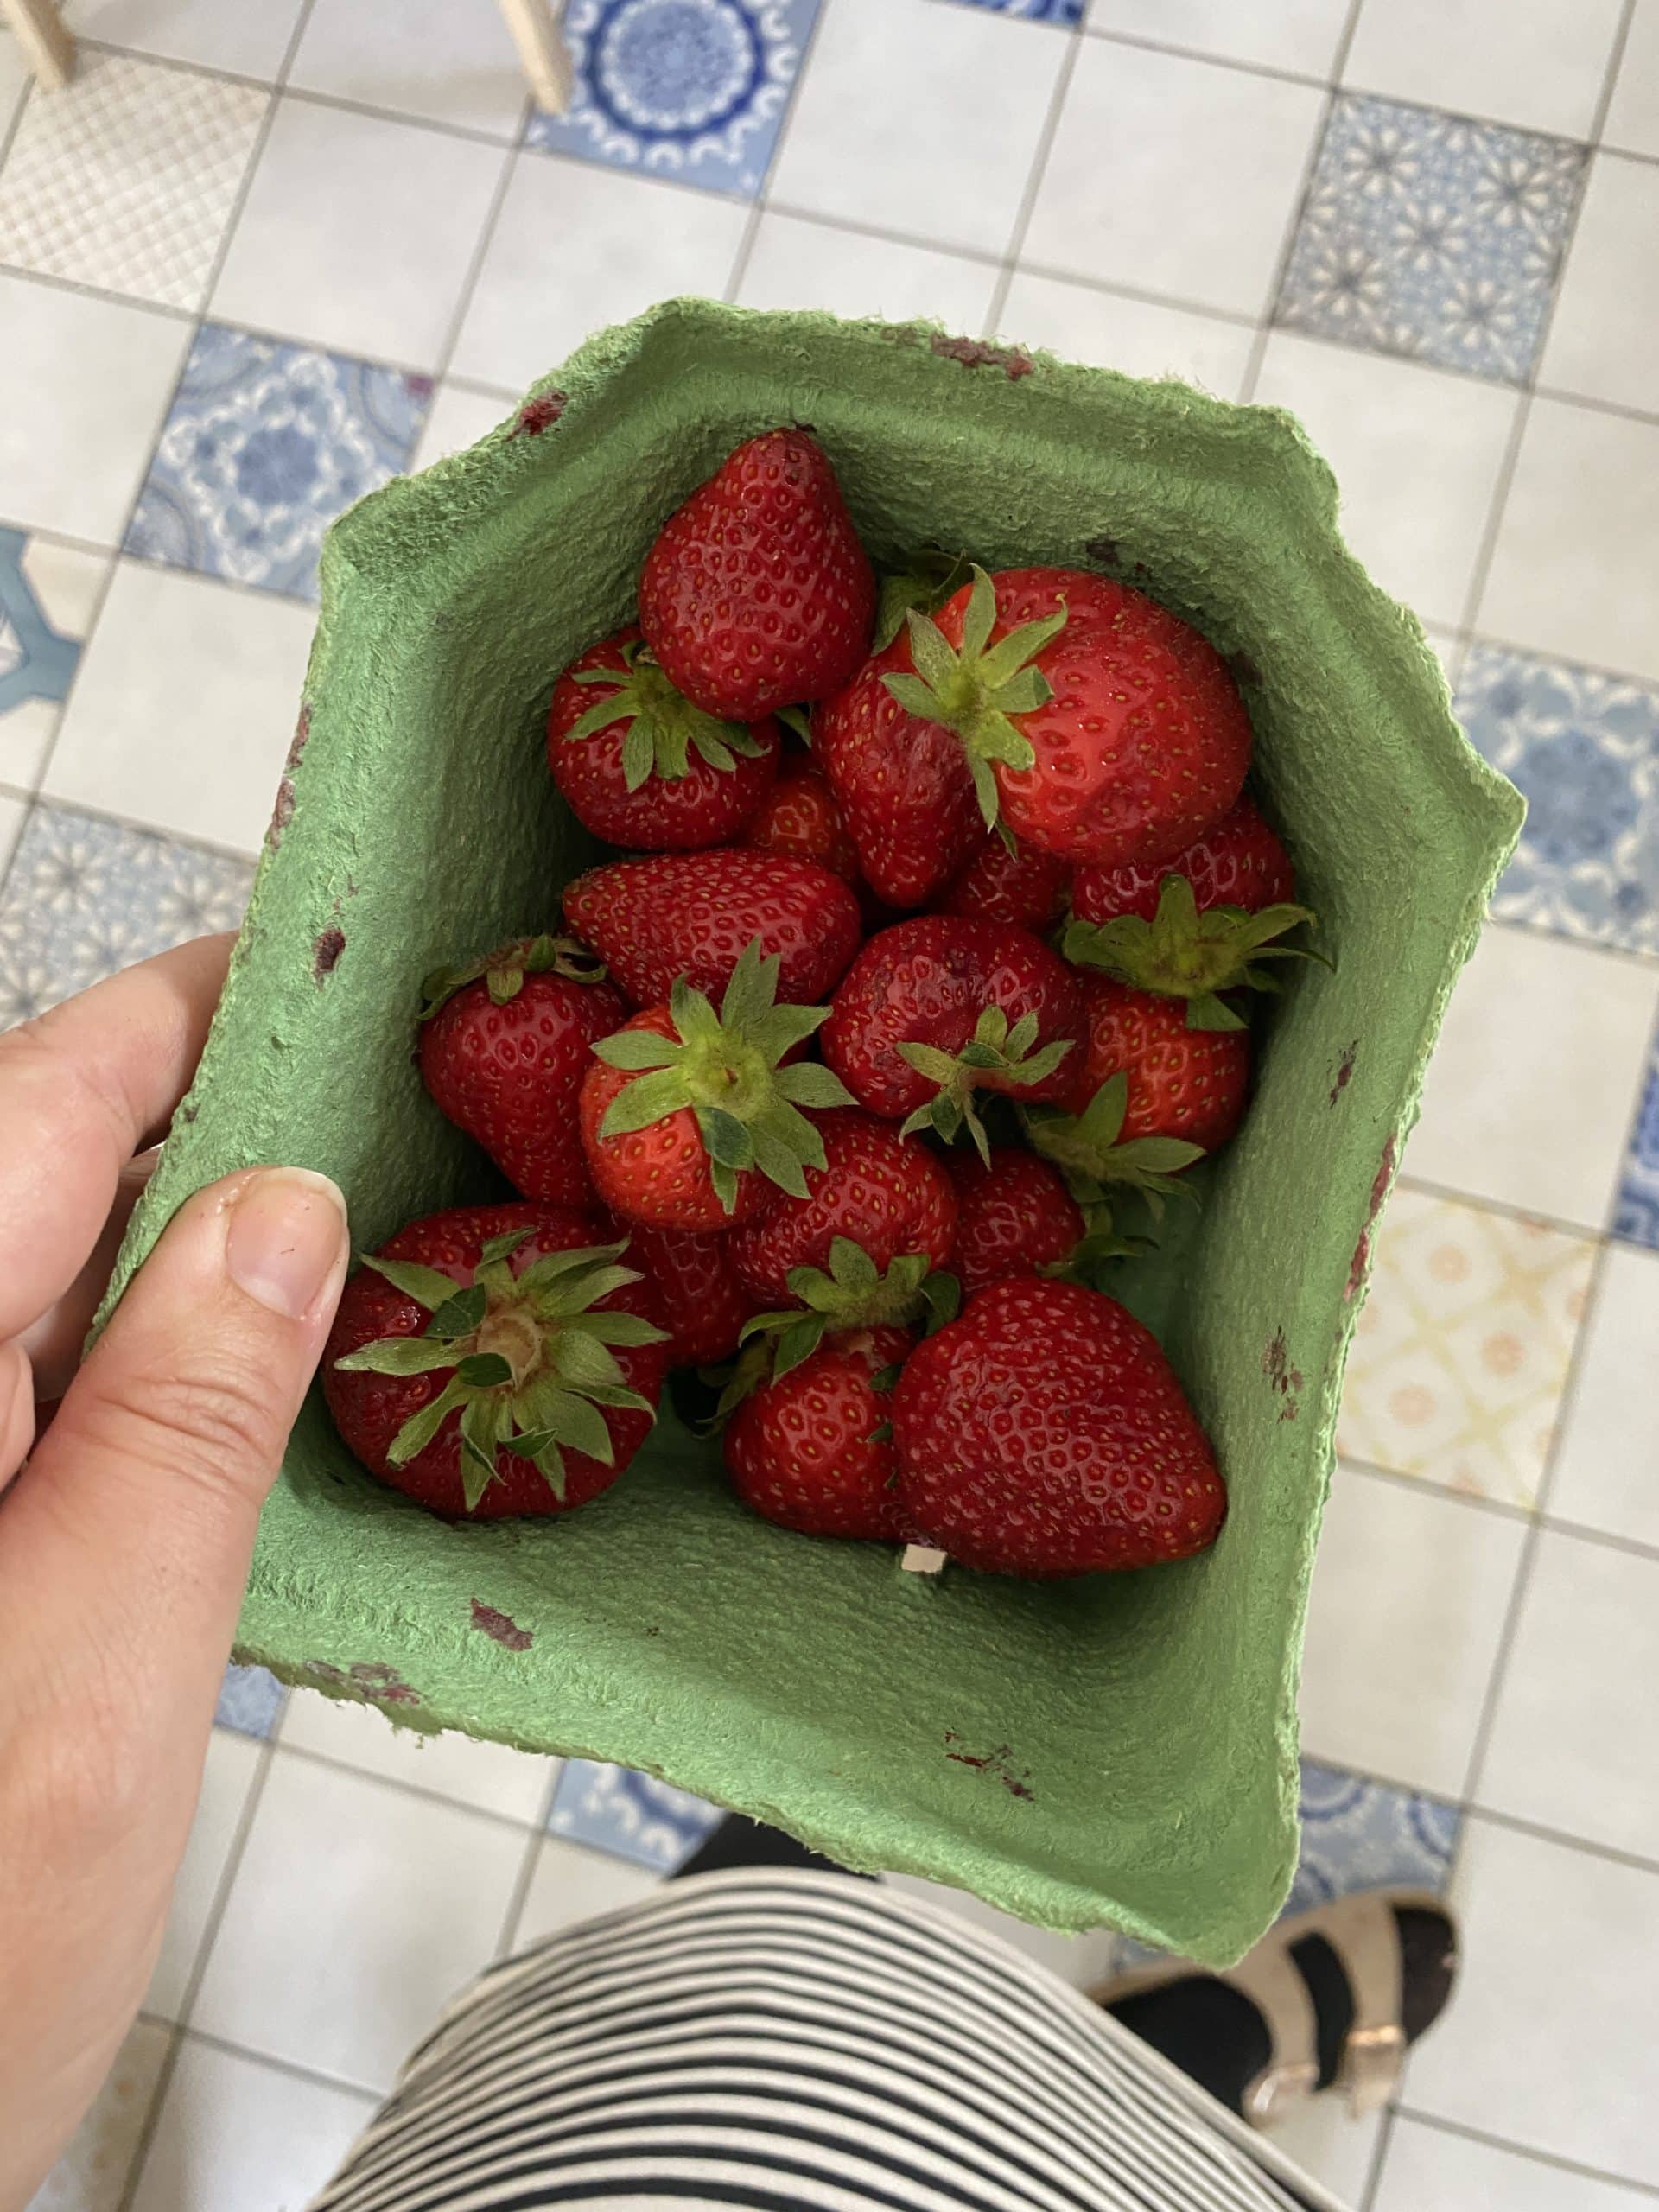 #5 Die letzten Erdbeeren vom Kind.